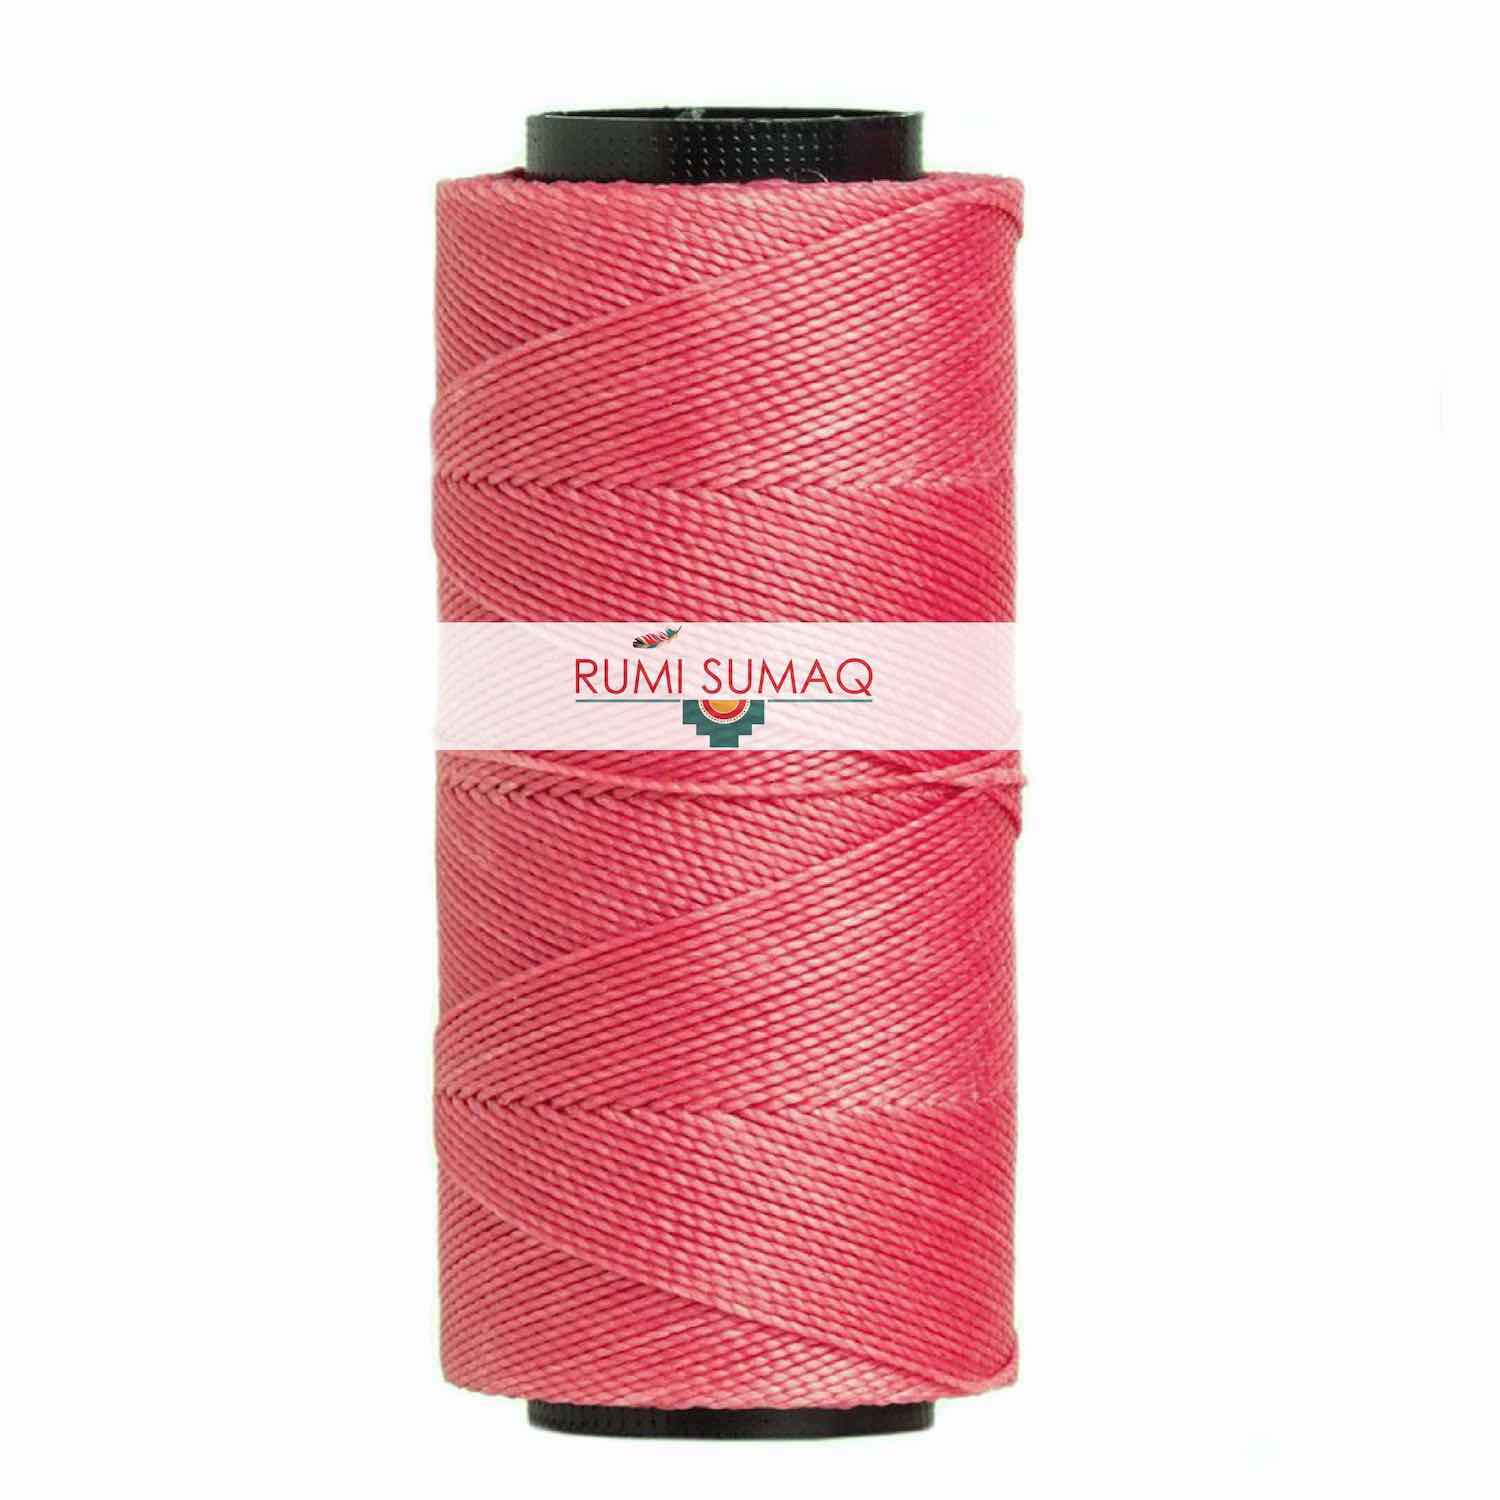 Settanyl 02-237 Rose Quartz Pink Waxed Polyester Cord 1mm Setta encerada Rosada | RUMI SUMAQ